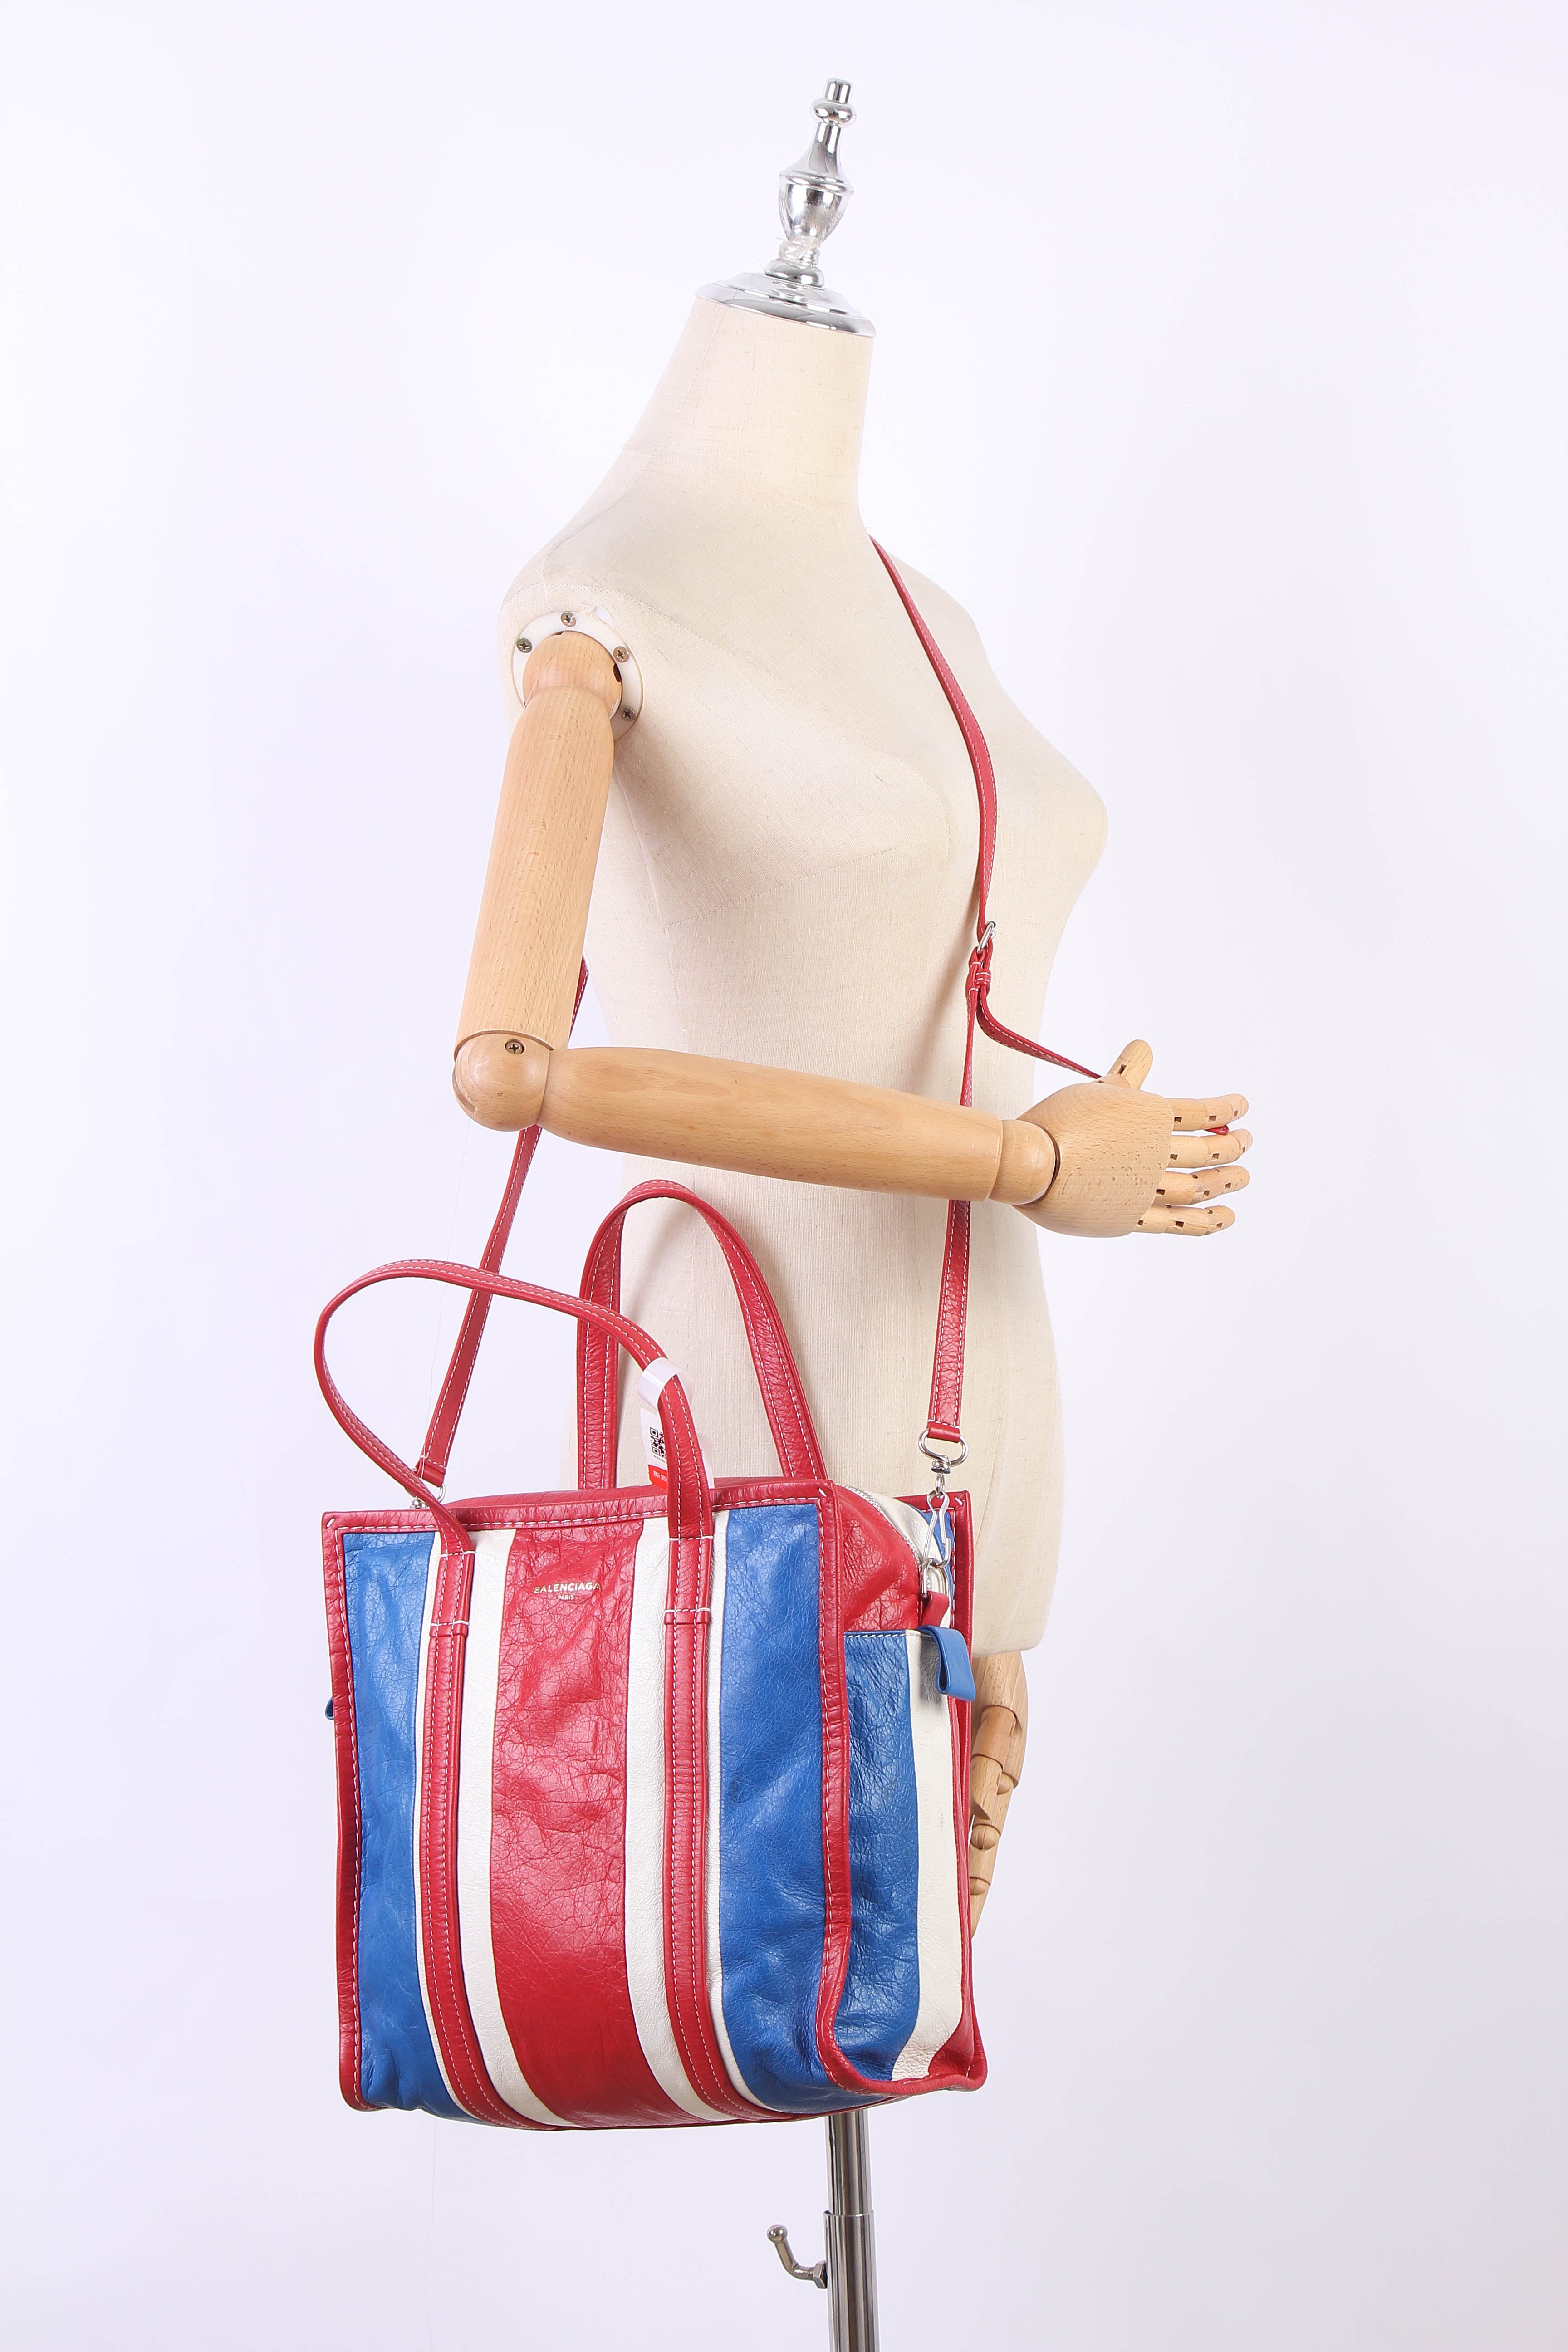 Balenciaga's Interpretation Of Iconic Red-White-Blue Bag Cost A Cool $2,000  - SHOUTS